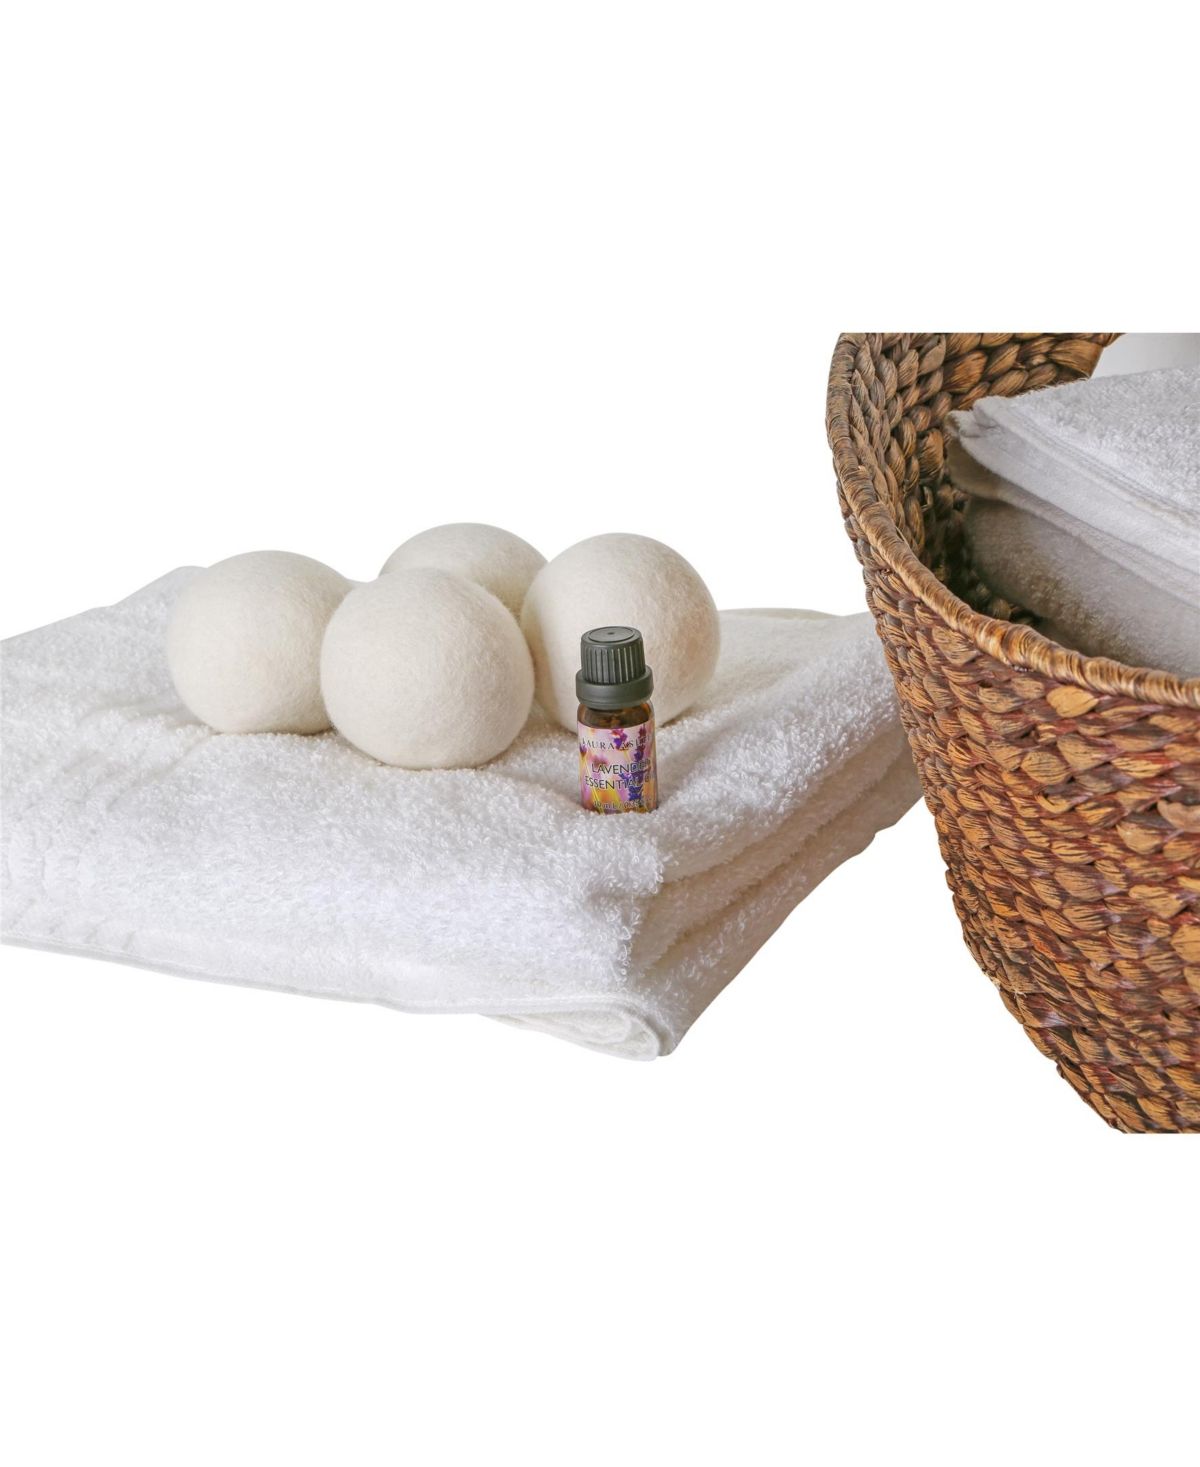 Laura Ashley 4 Pack Wool Dryer Balls and Lavender Essential Oil Kit | Macys (US)